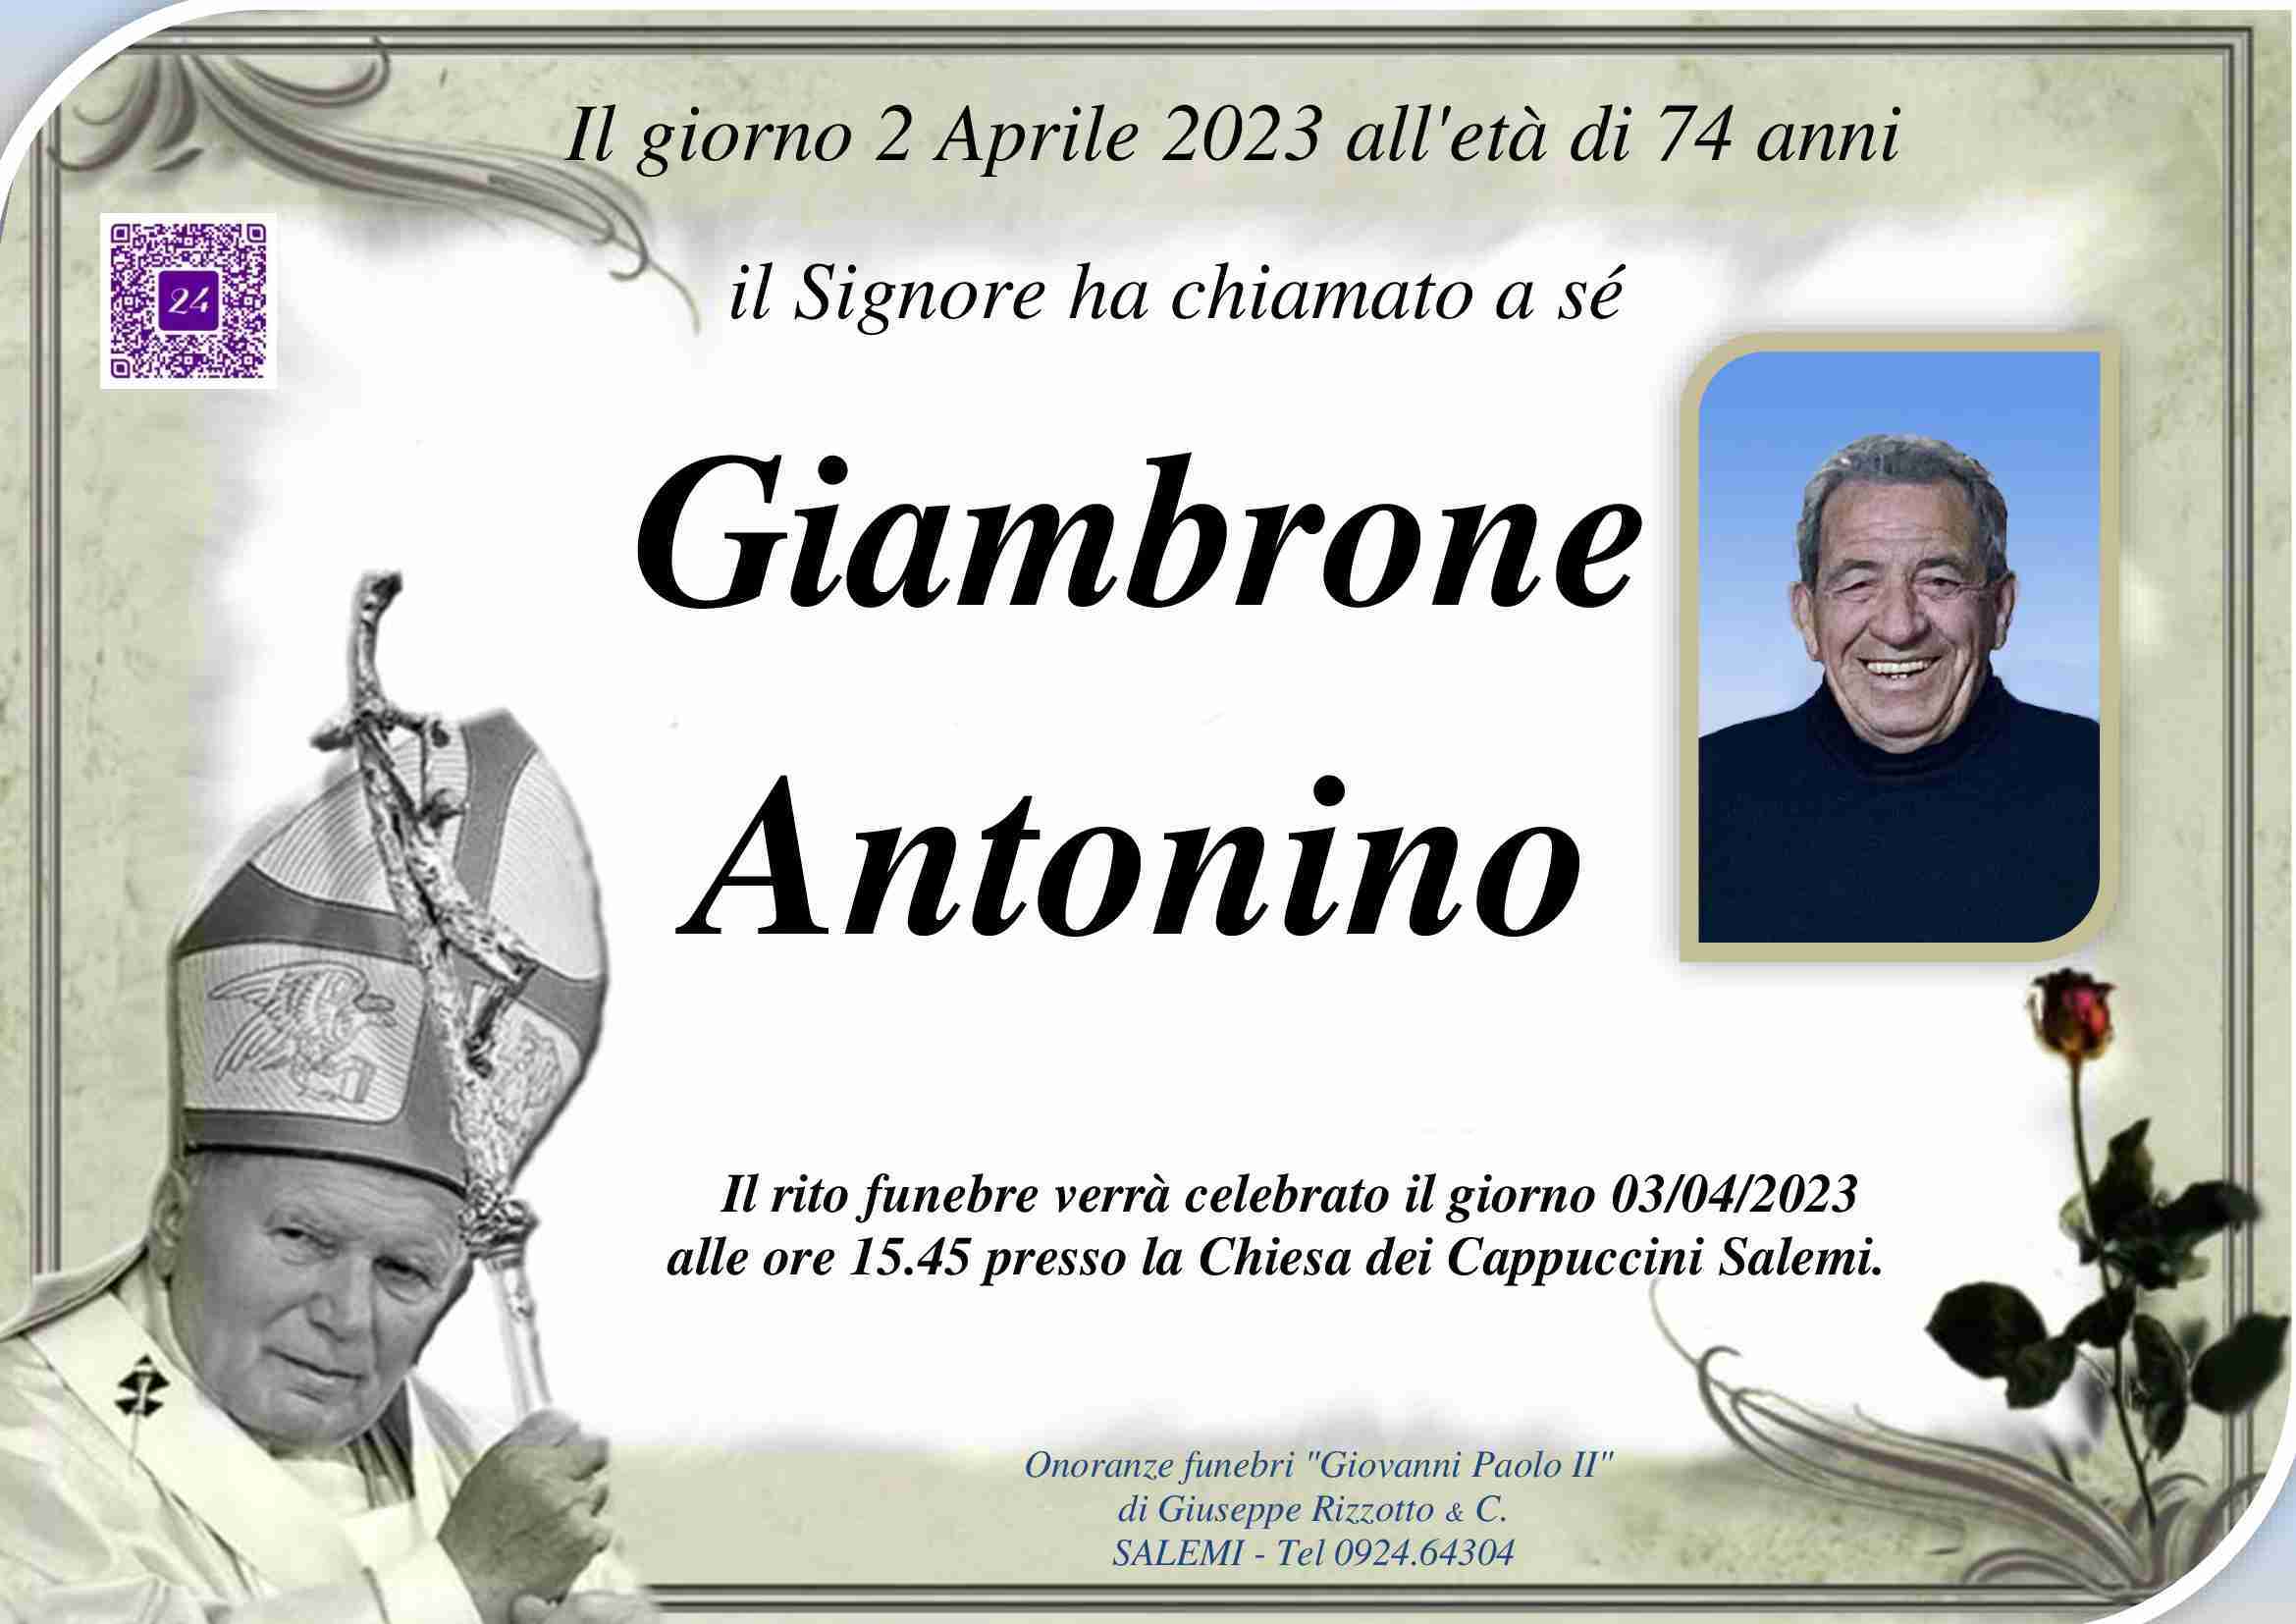 Antonino Giambrone